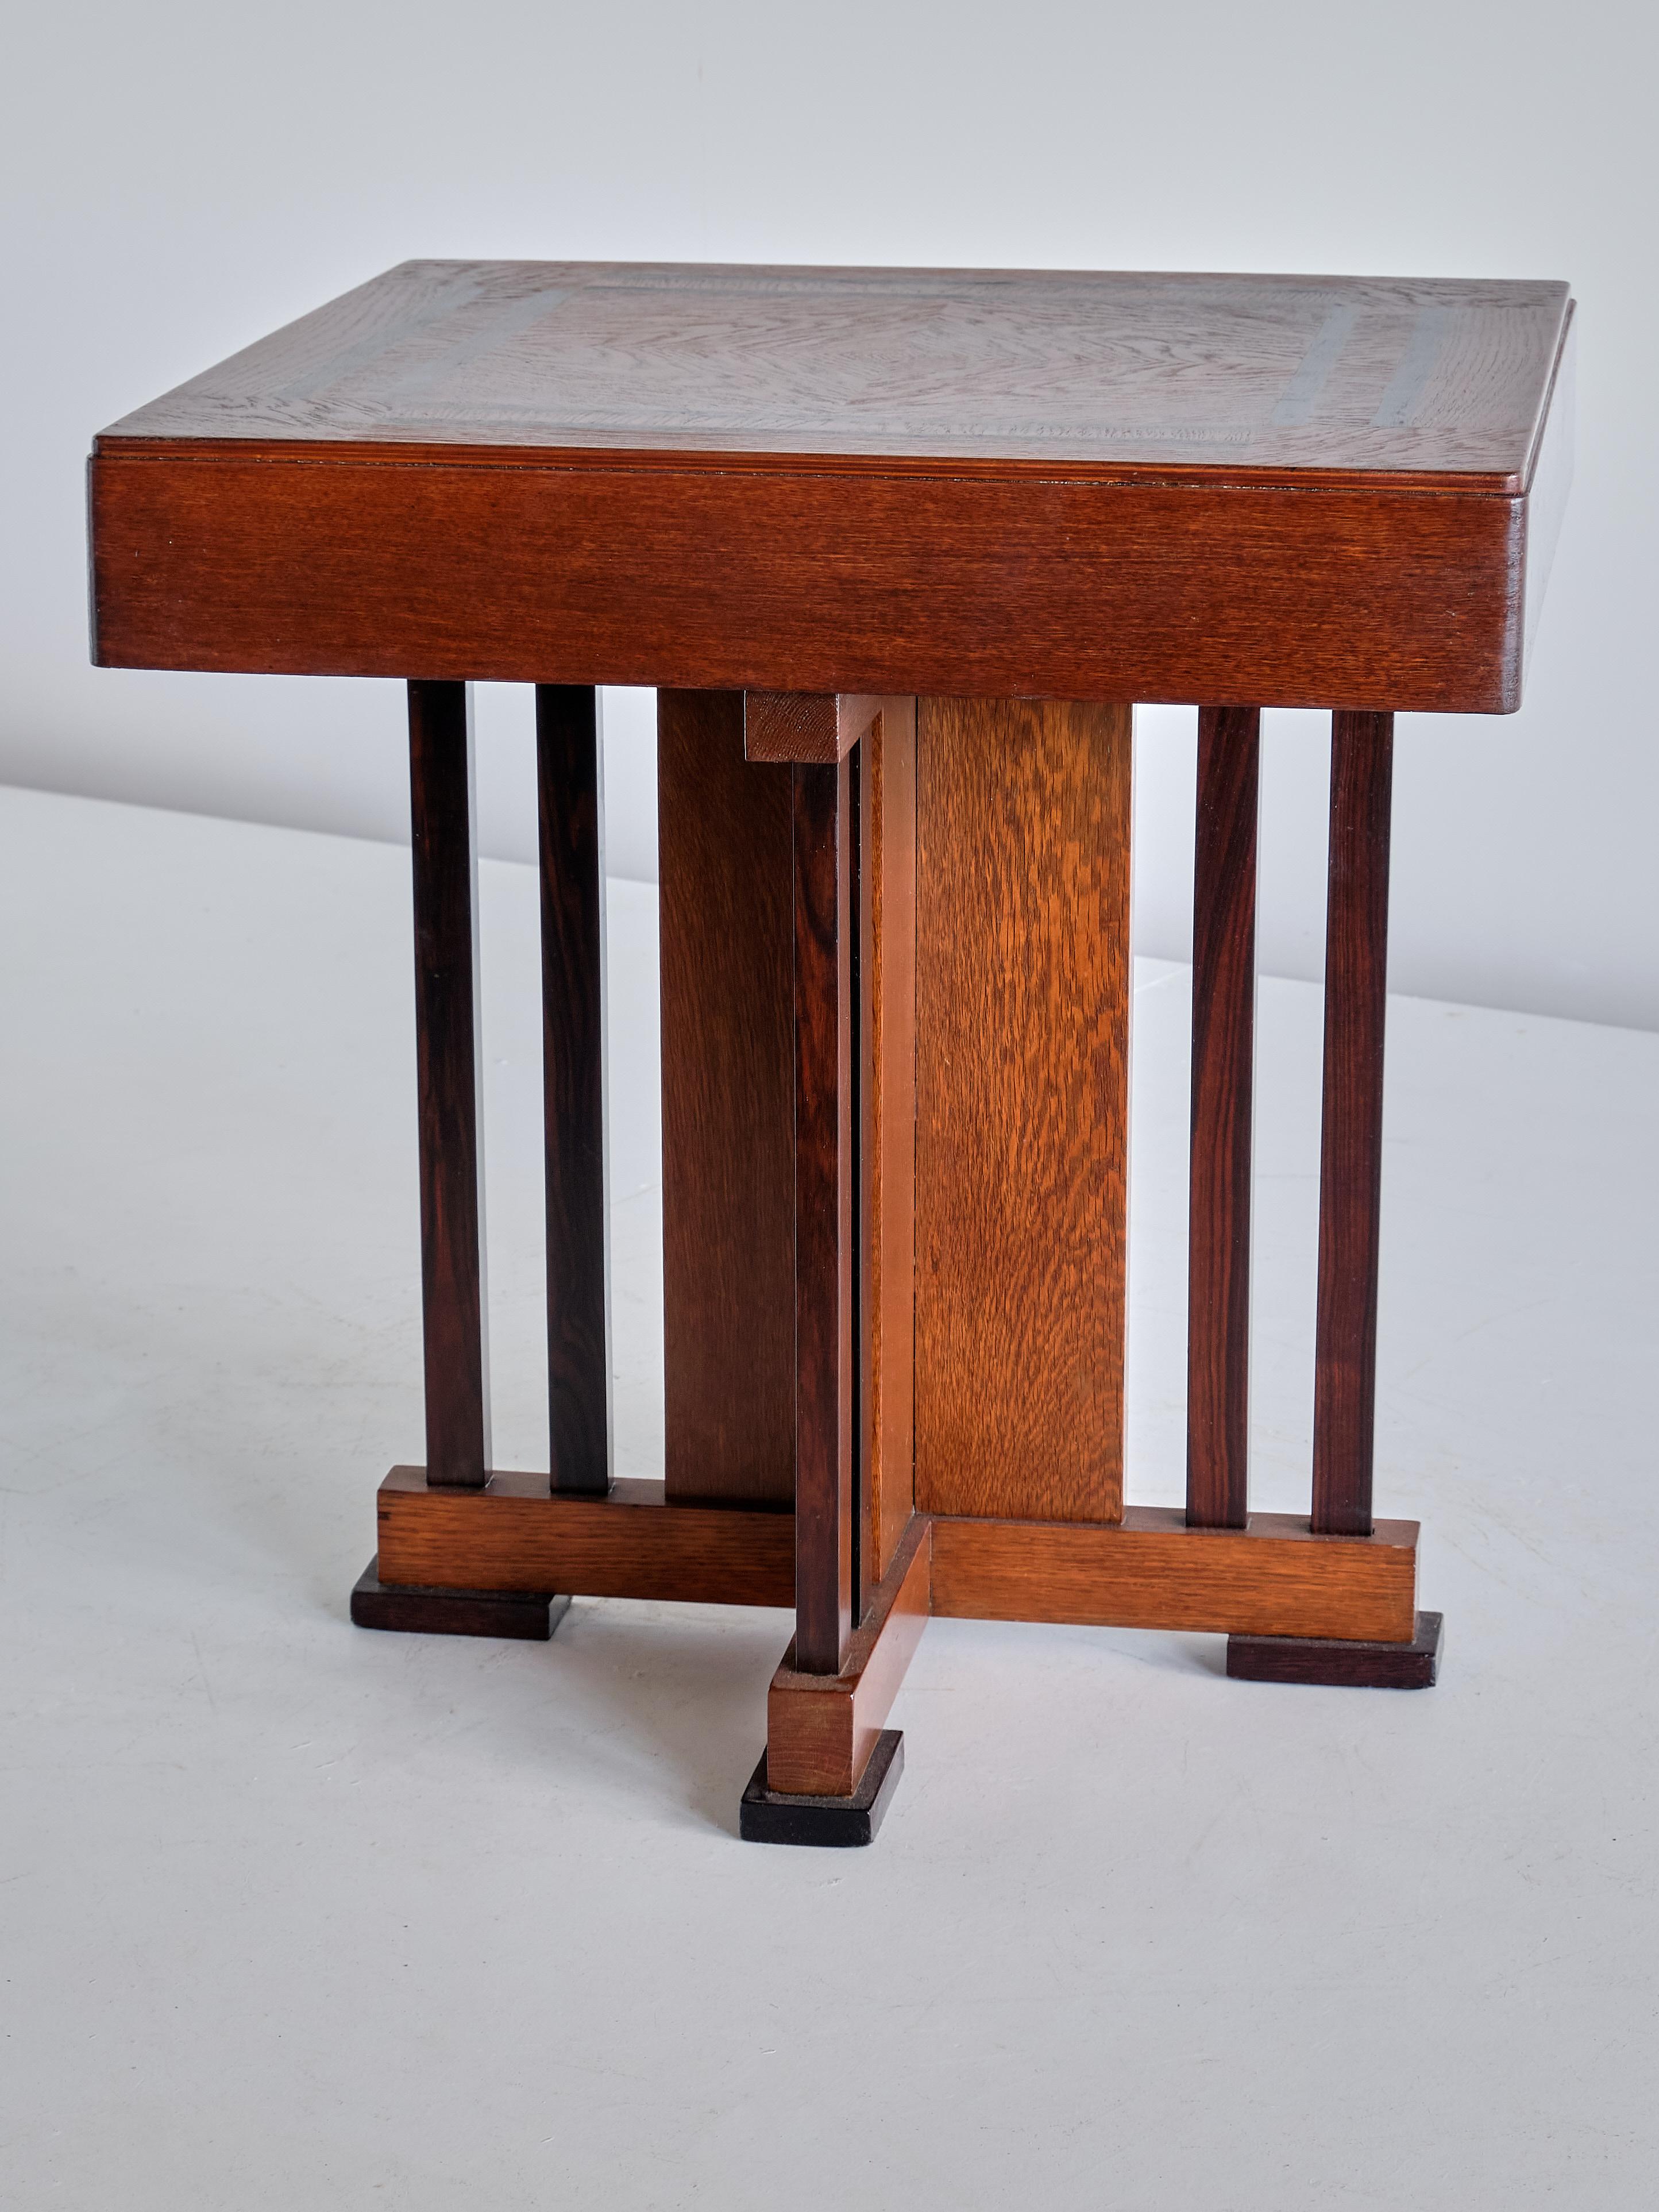 Art Deco P.E.L. Izeren Side Table in Oak and Macassar Ebony, Netherlands, 1930s For Sale